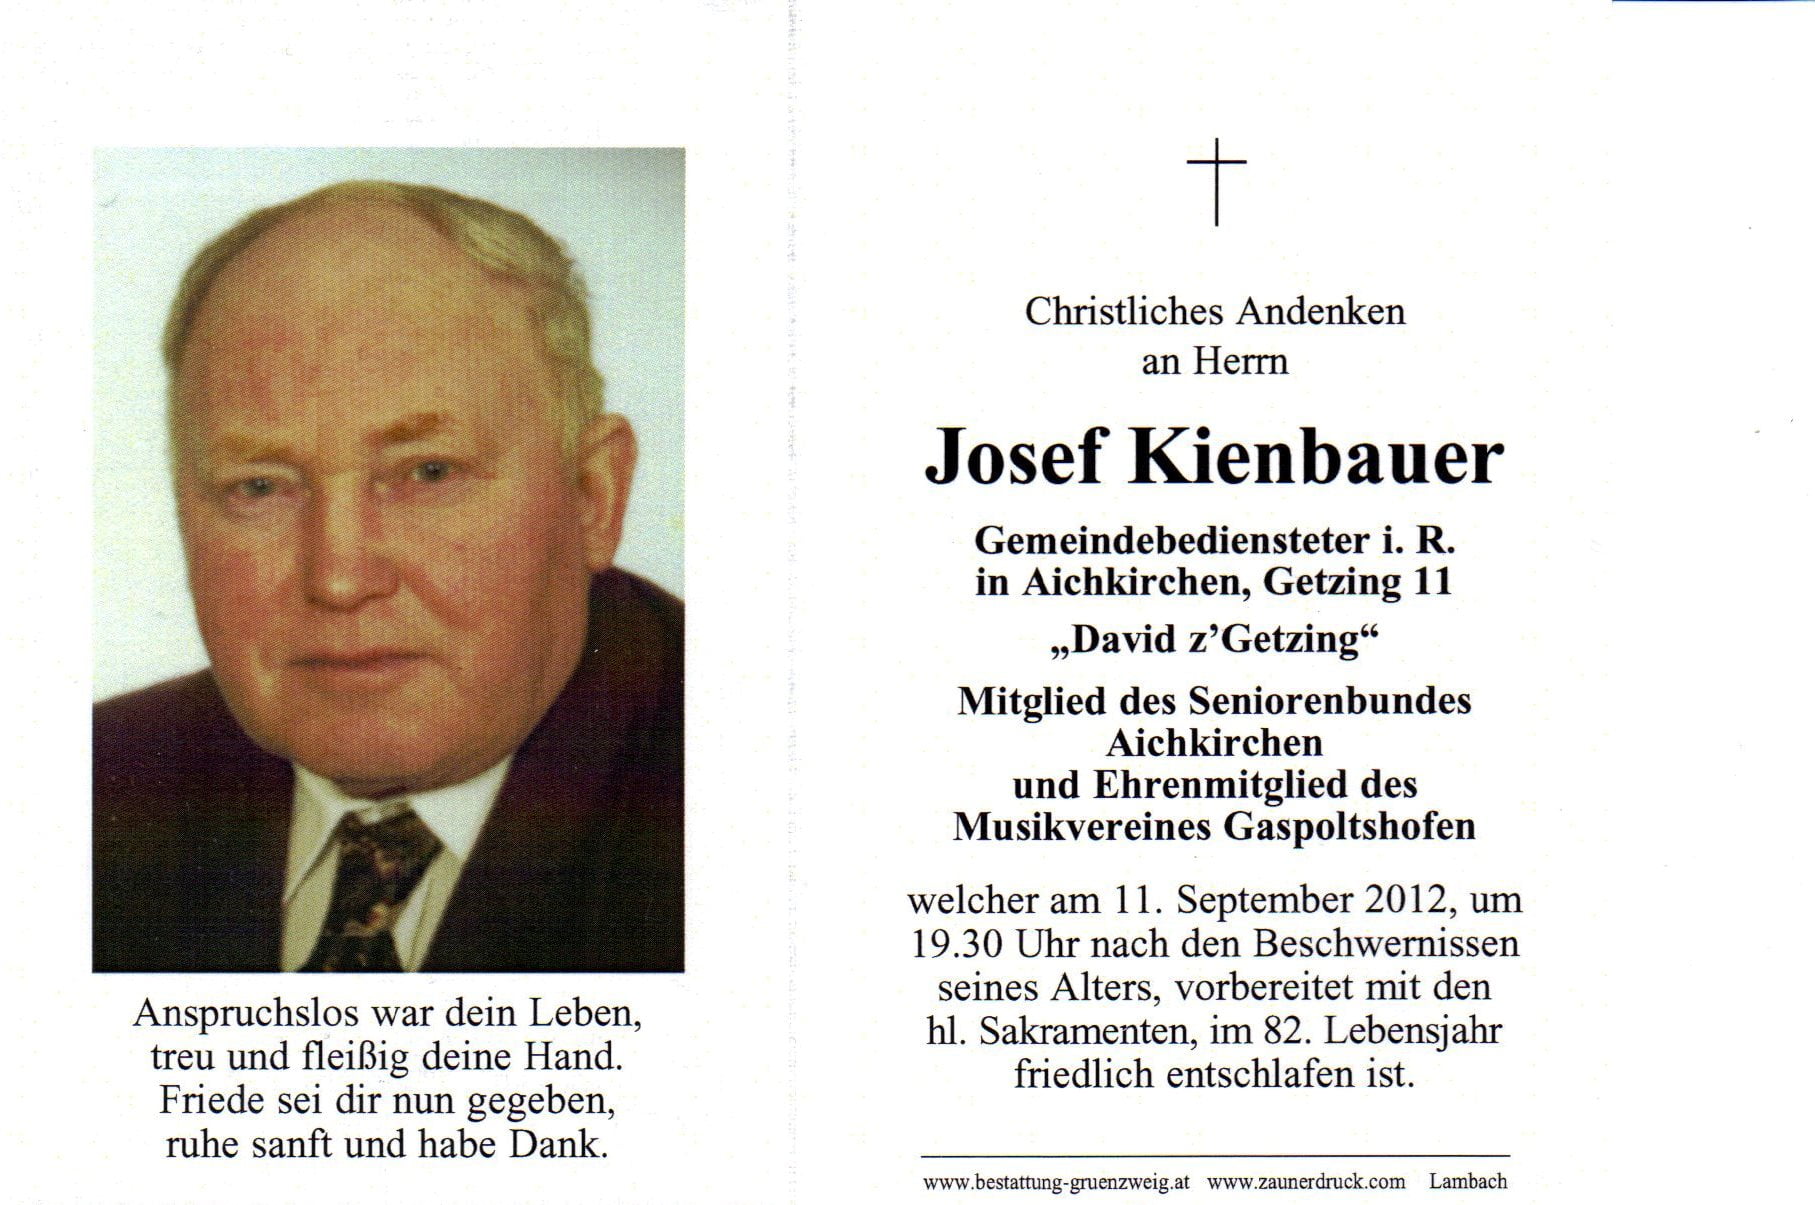 Josef Kienbauer